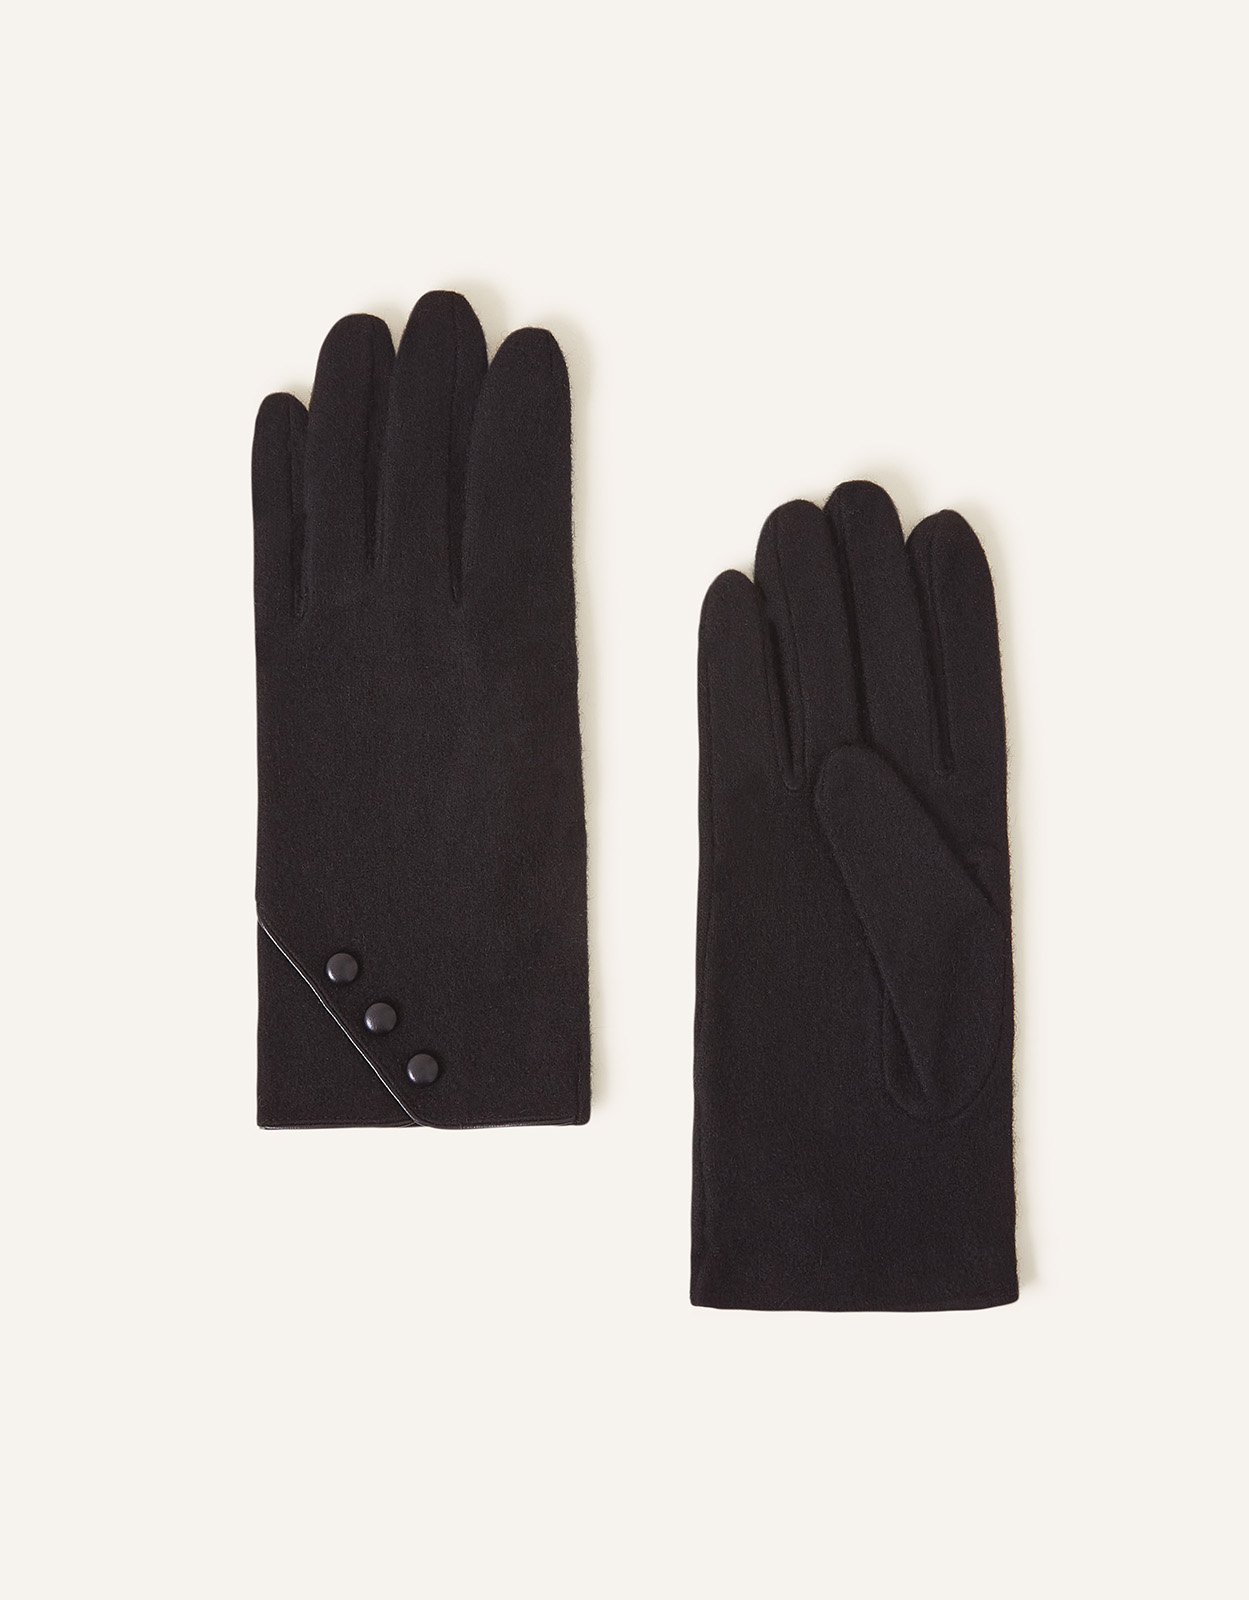 Accessorize Women's Touchscreen Button Gloves in Wool Blend Black